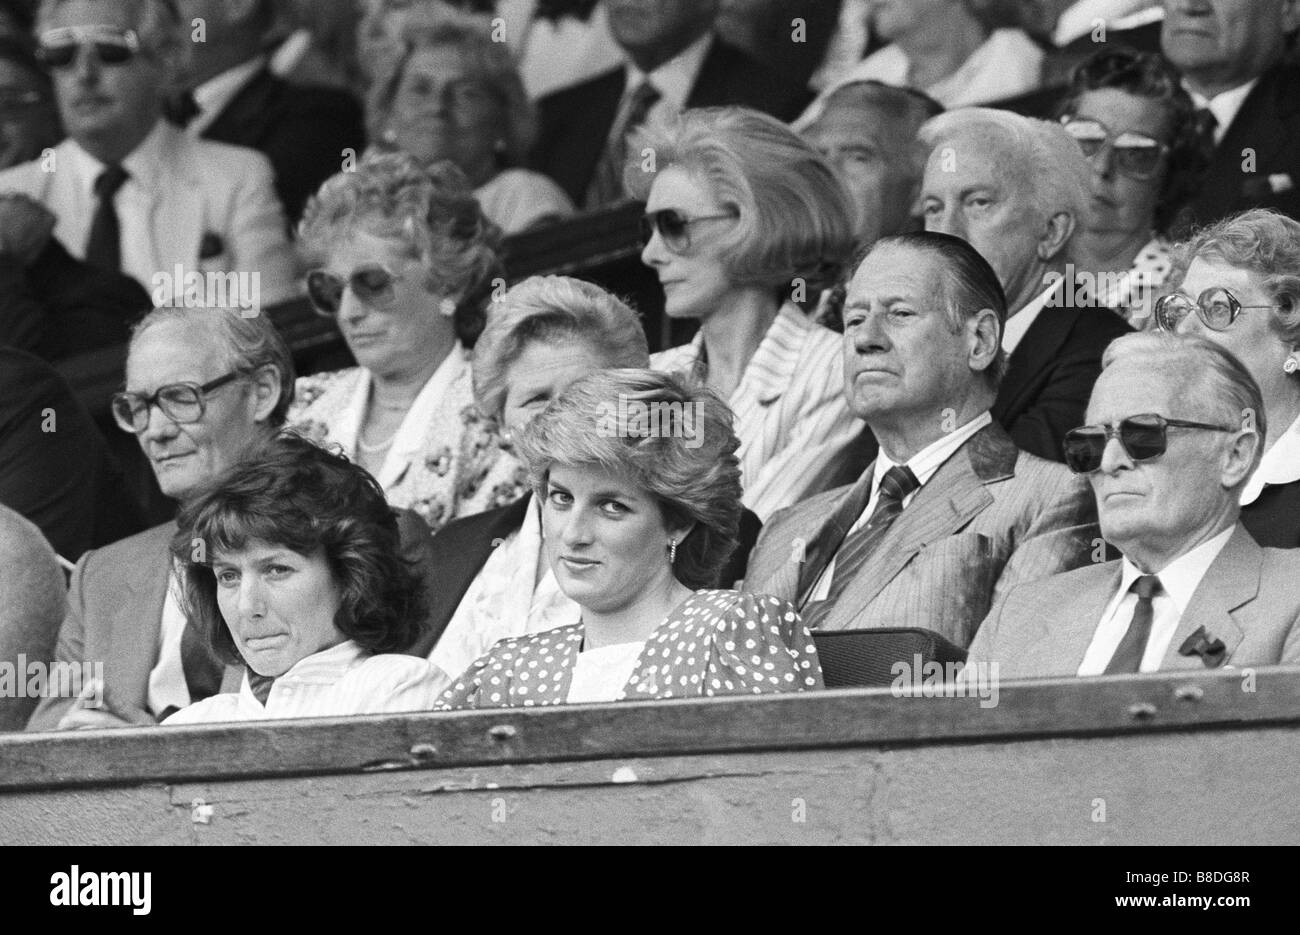 Diana Princess of Wales in der Royal Box bei den Wimbledon Tennis Championships. Bild von David Bagnall. Prinzessin Diana 1980er Jahre Spencer Stockfoto